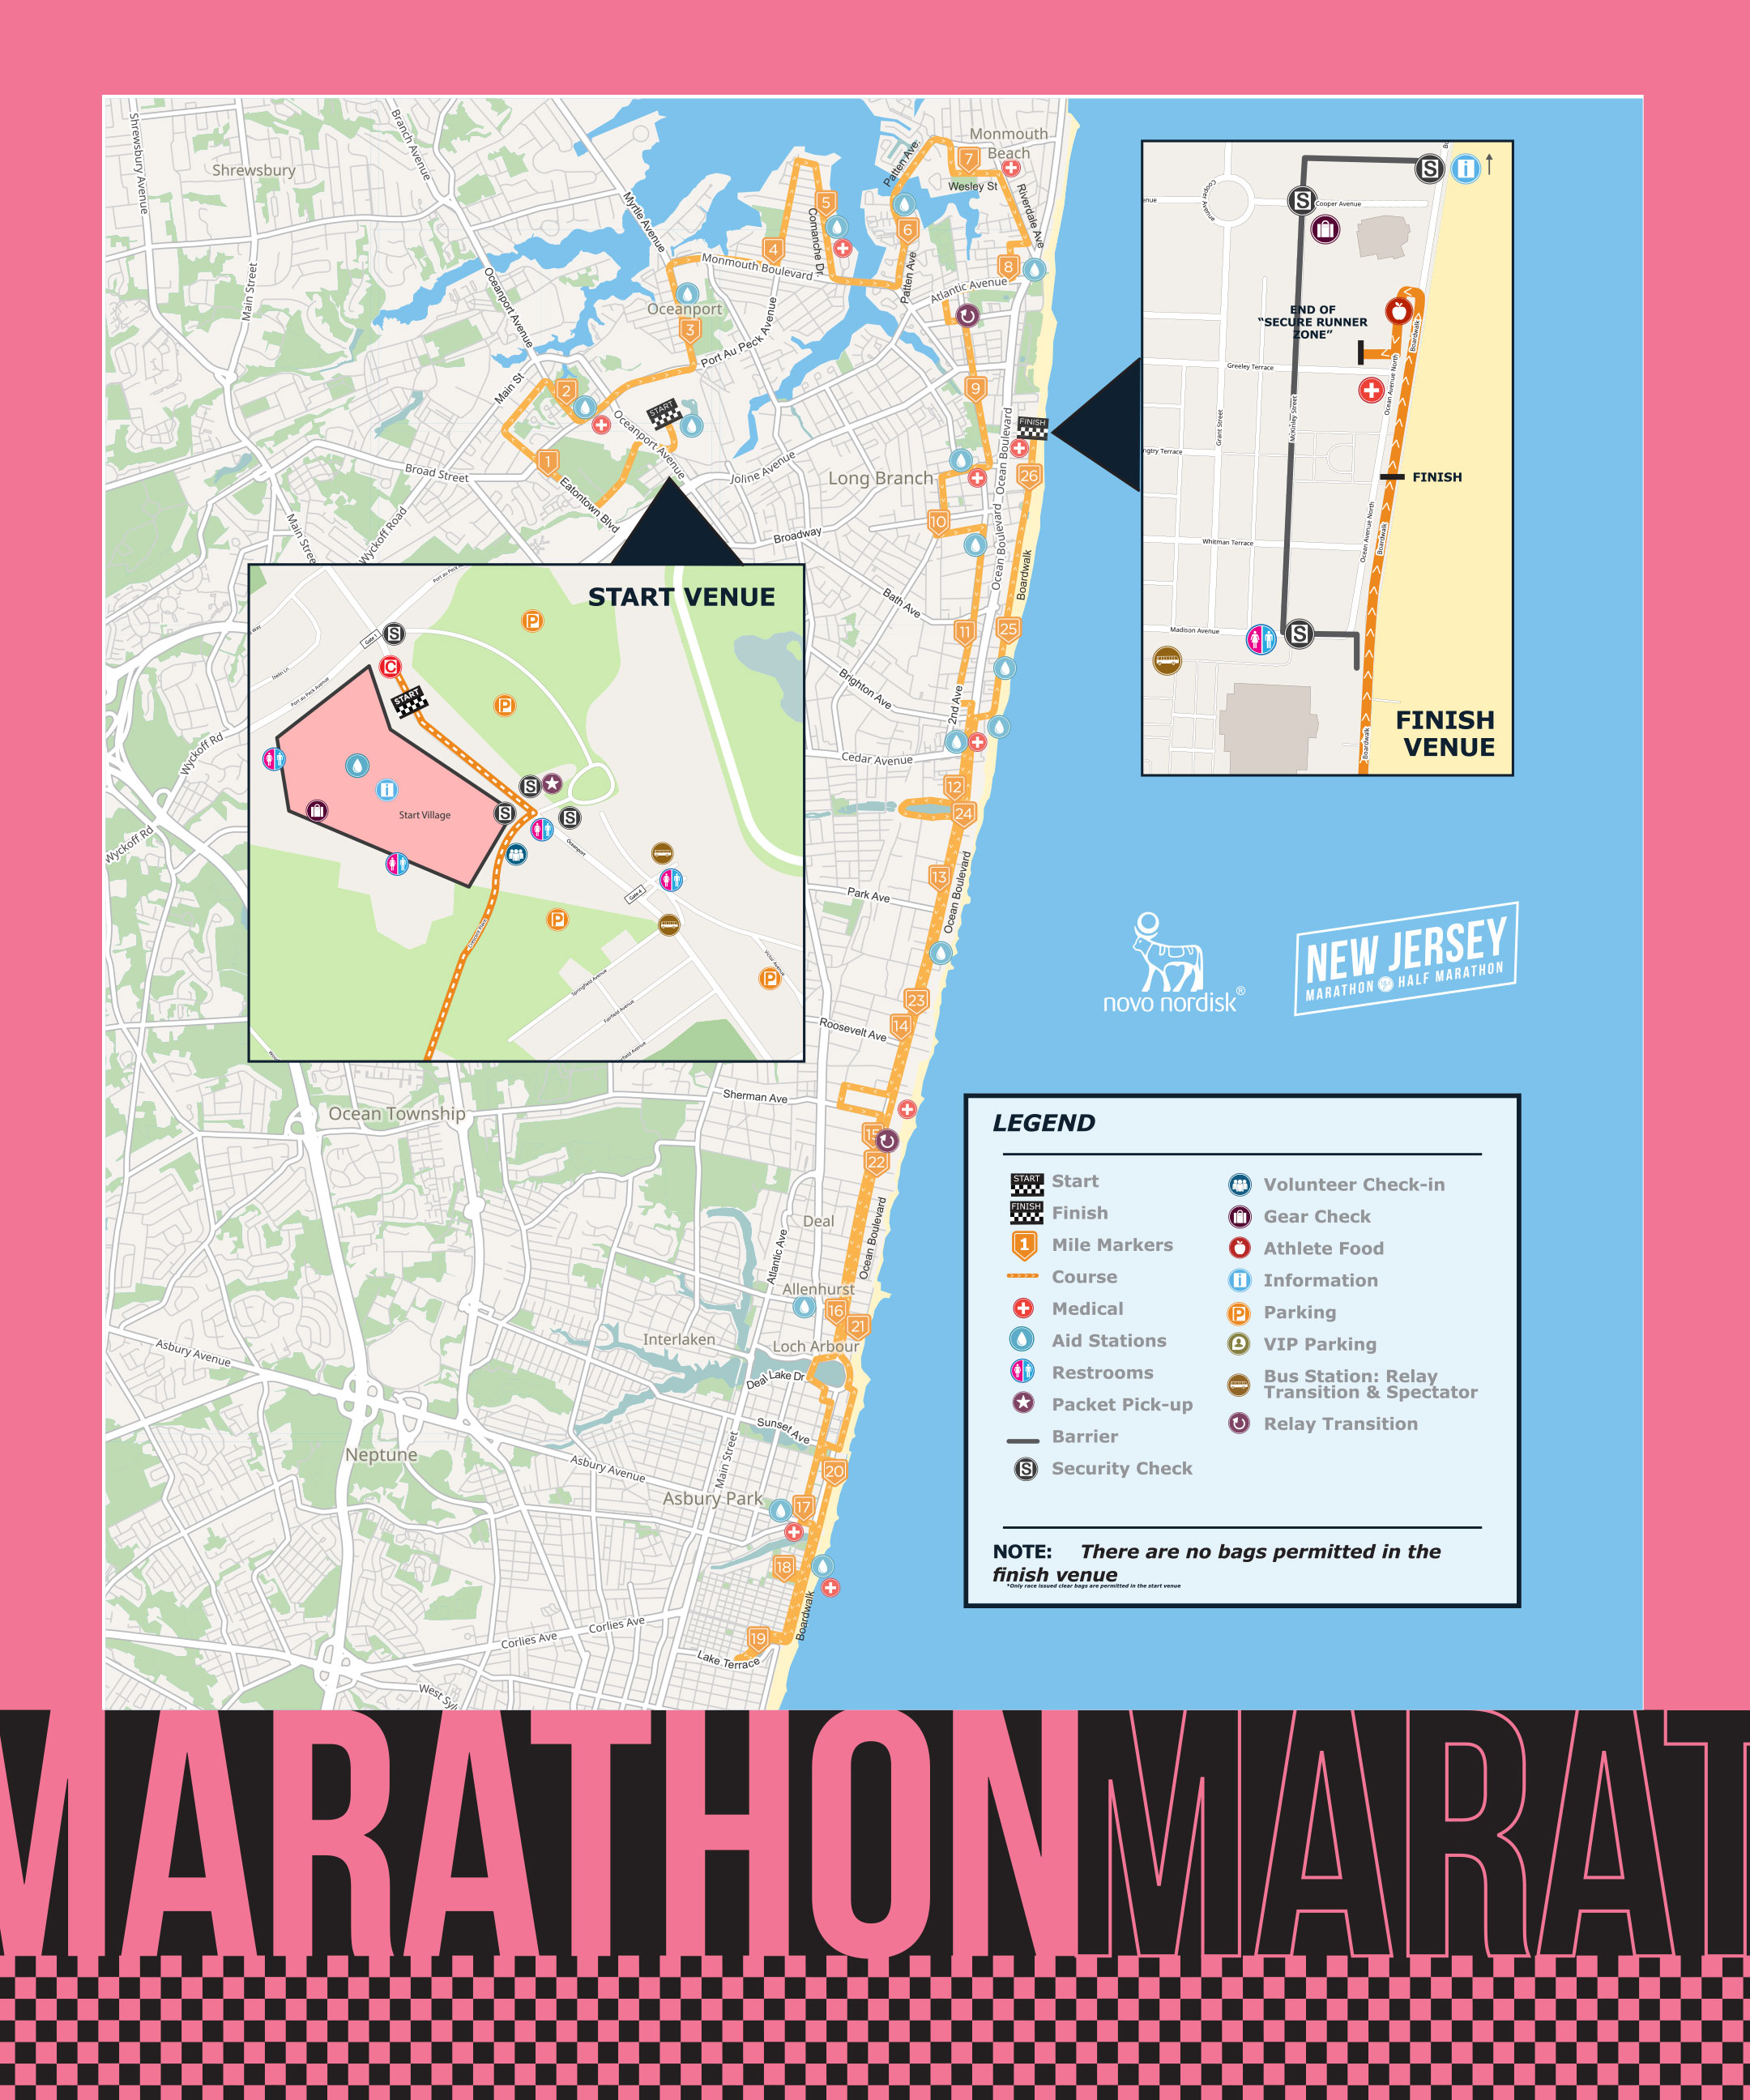 Courses The Novo Nordisk New Jersey Marathon